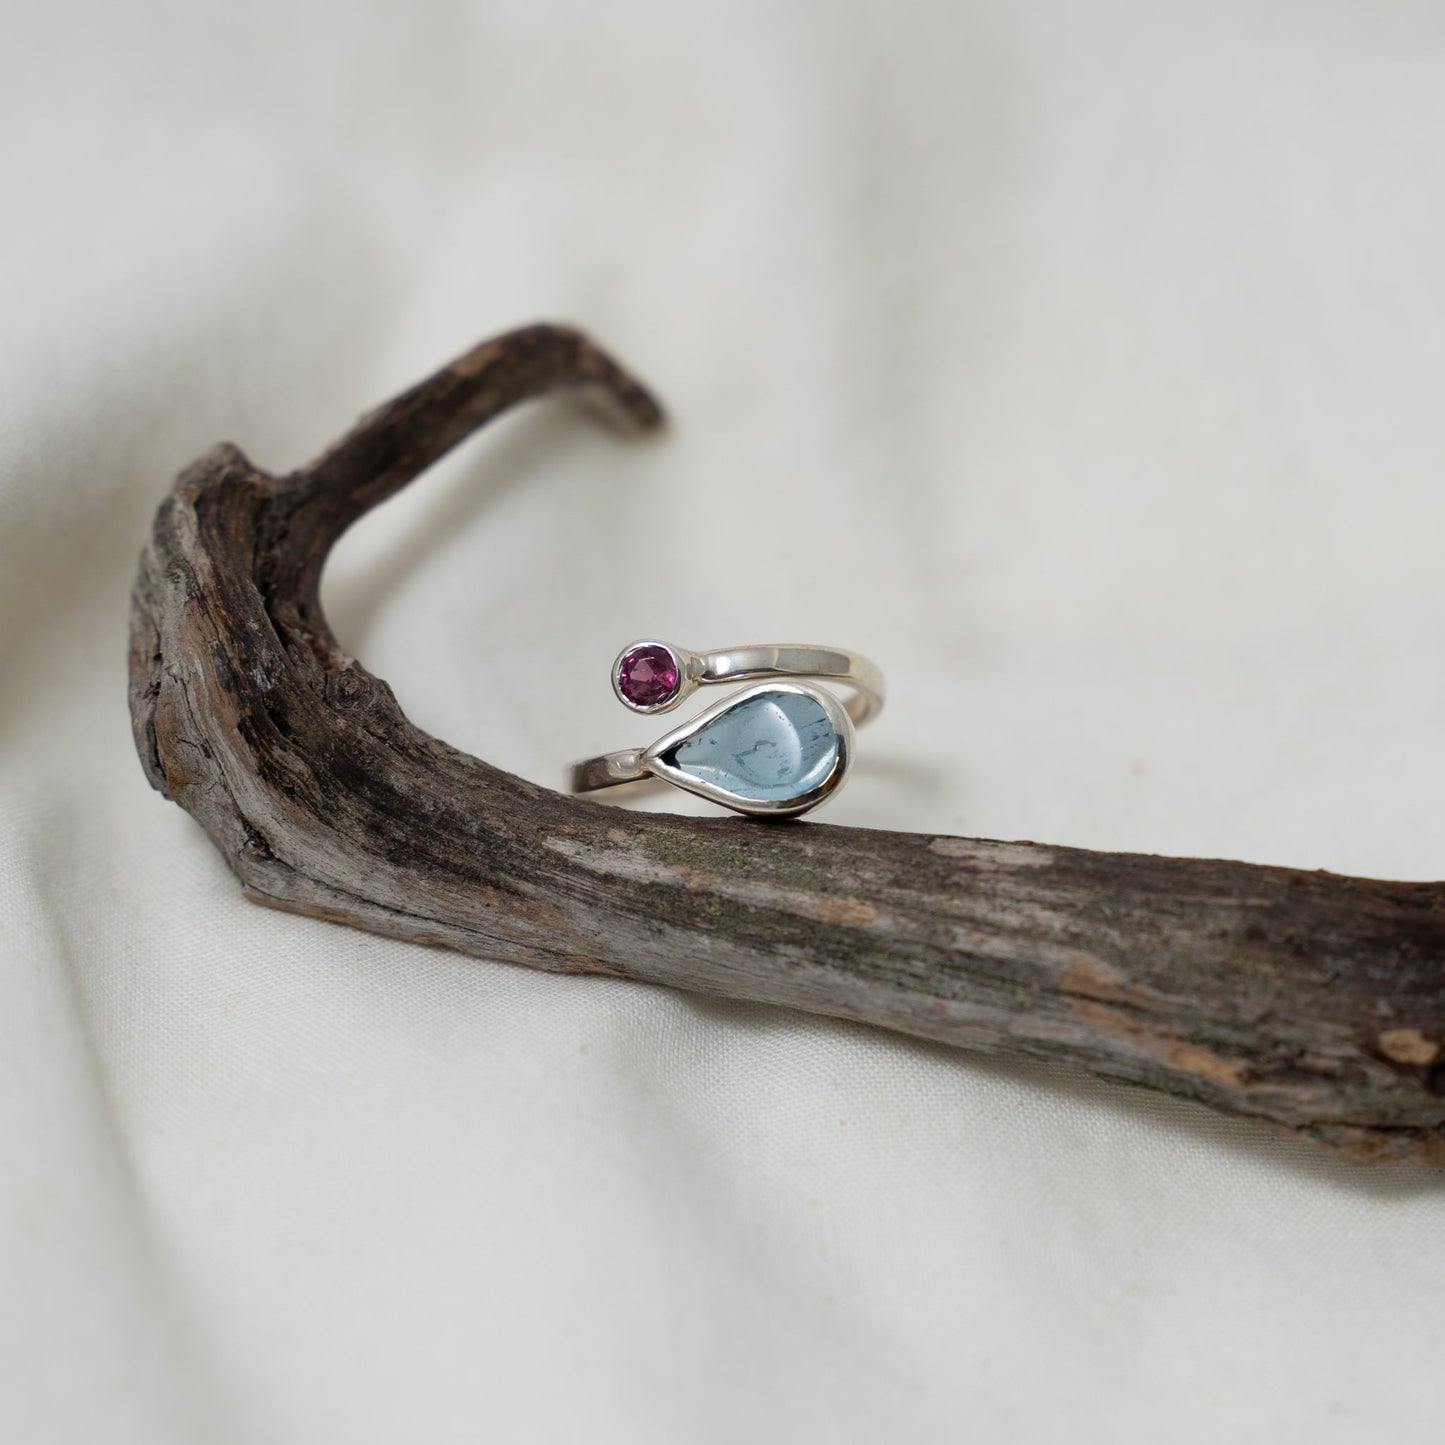 Aquamarine and rhodalite open silver ring